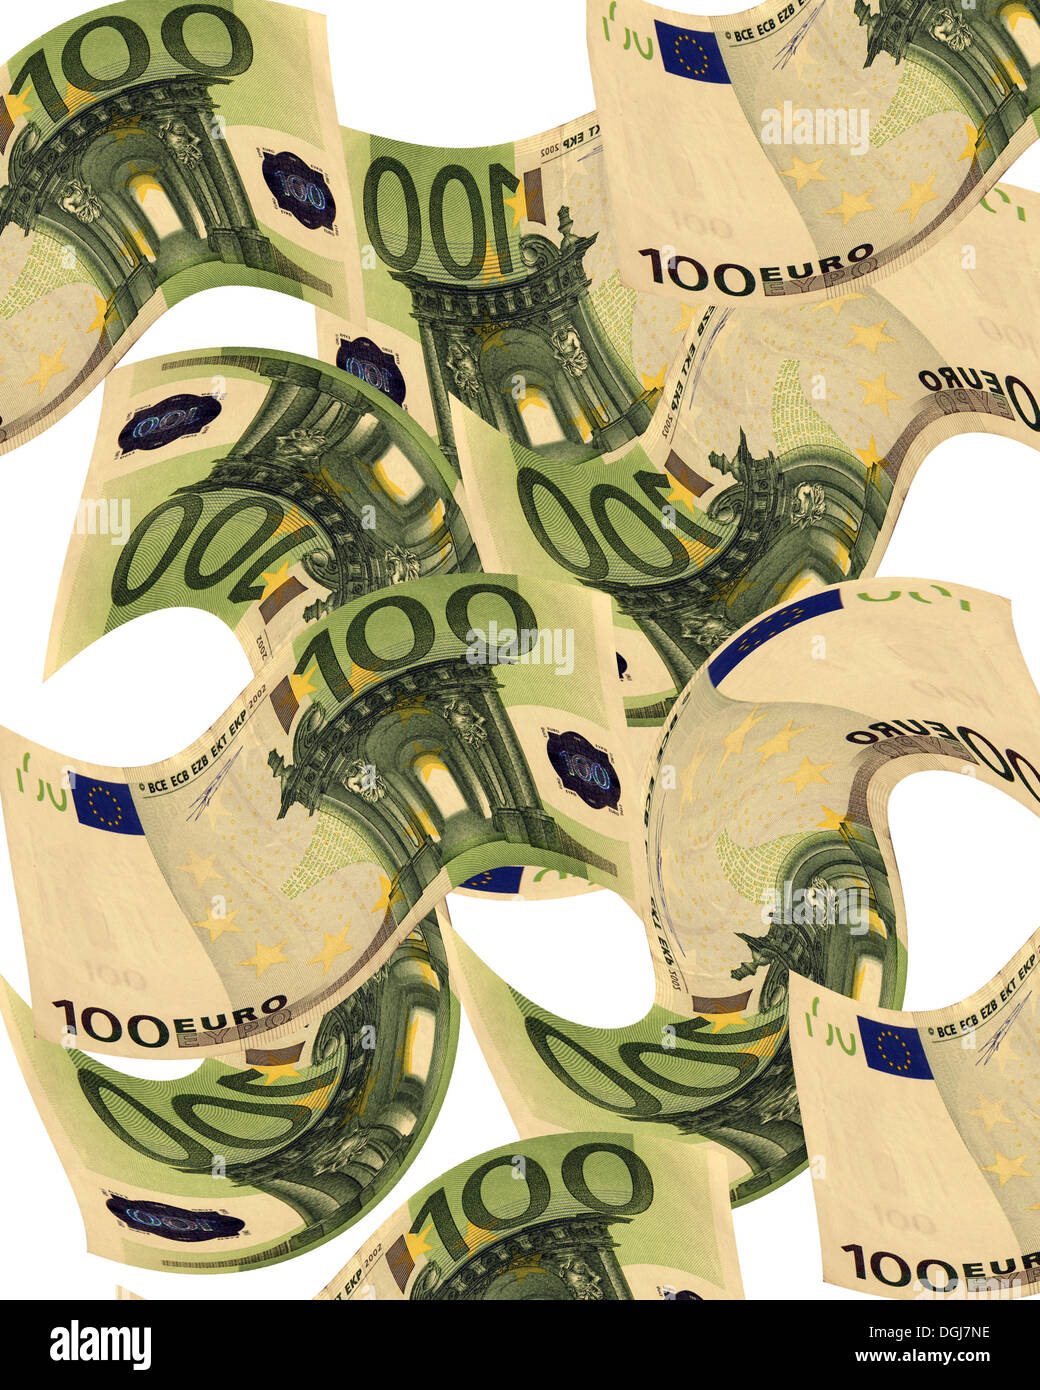 Design Based on One Hundred Euro Bank Notes Stock Photo